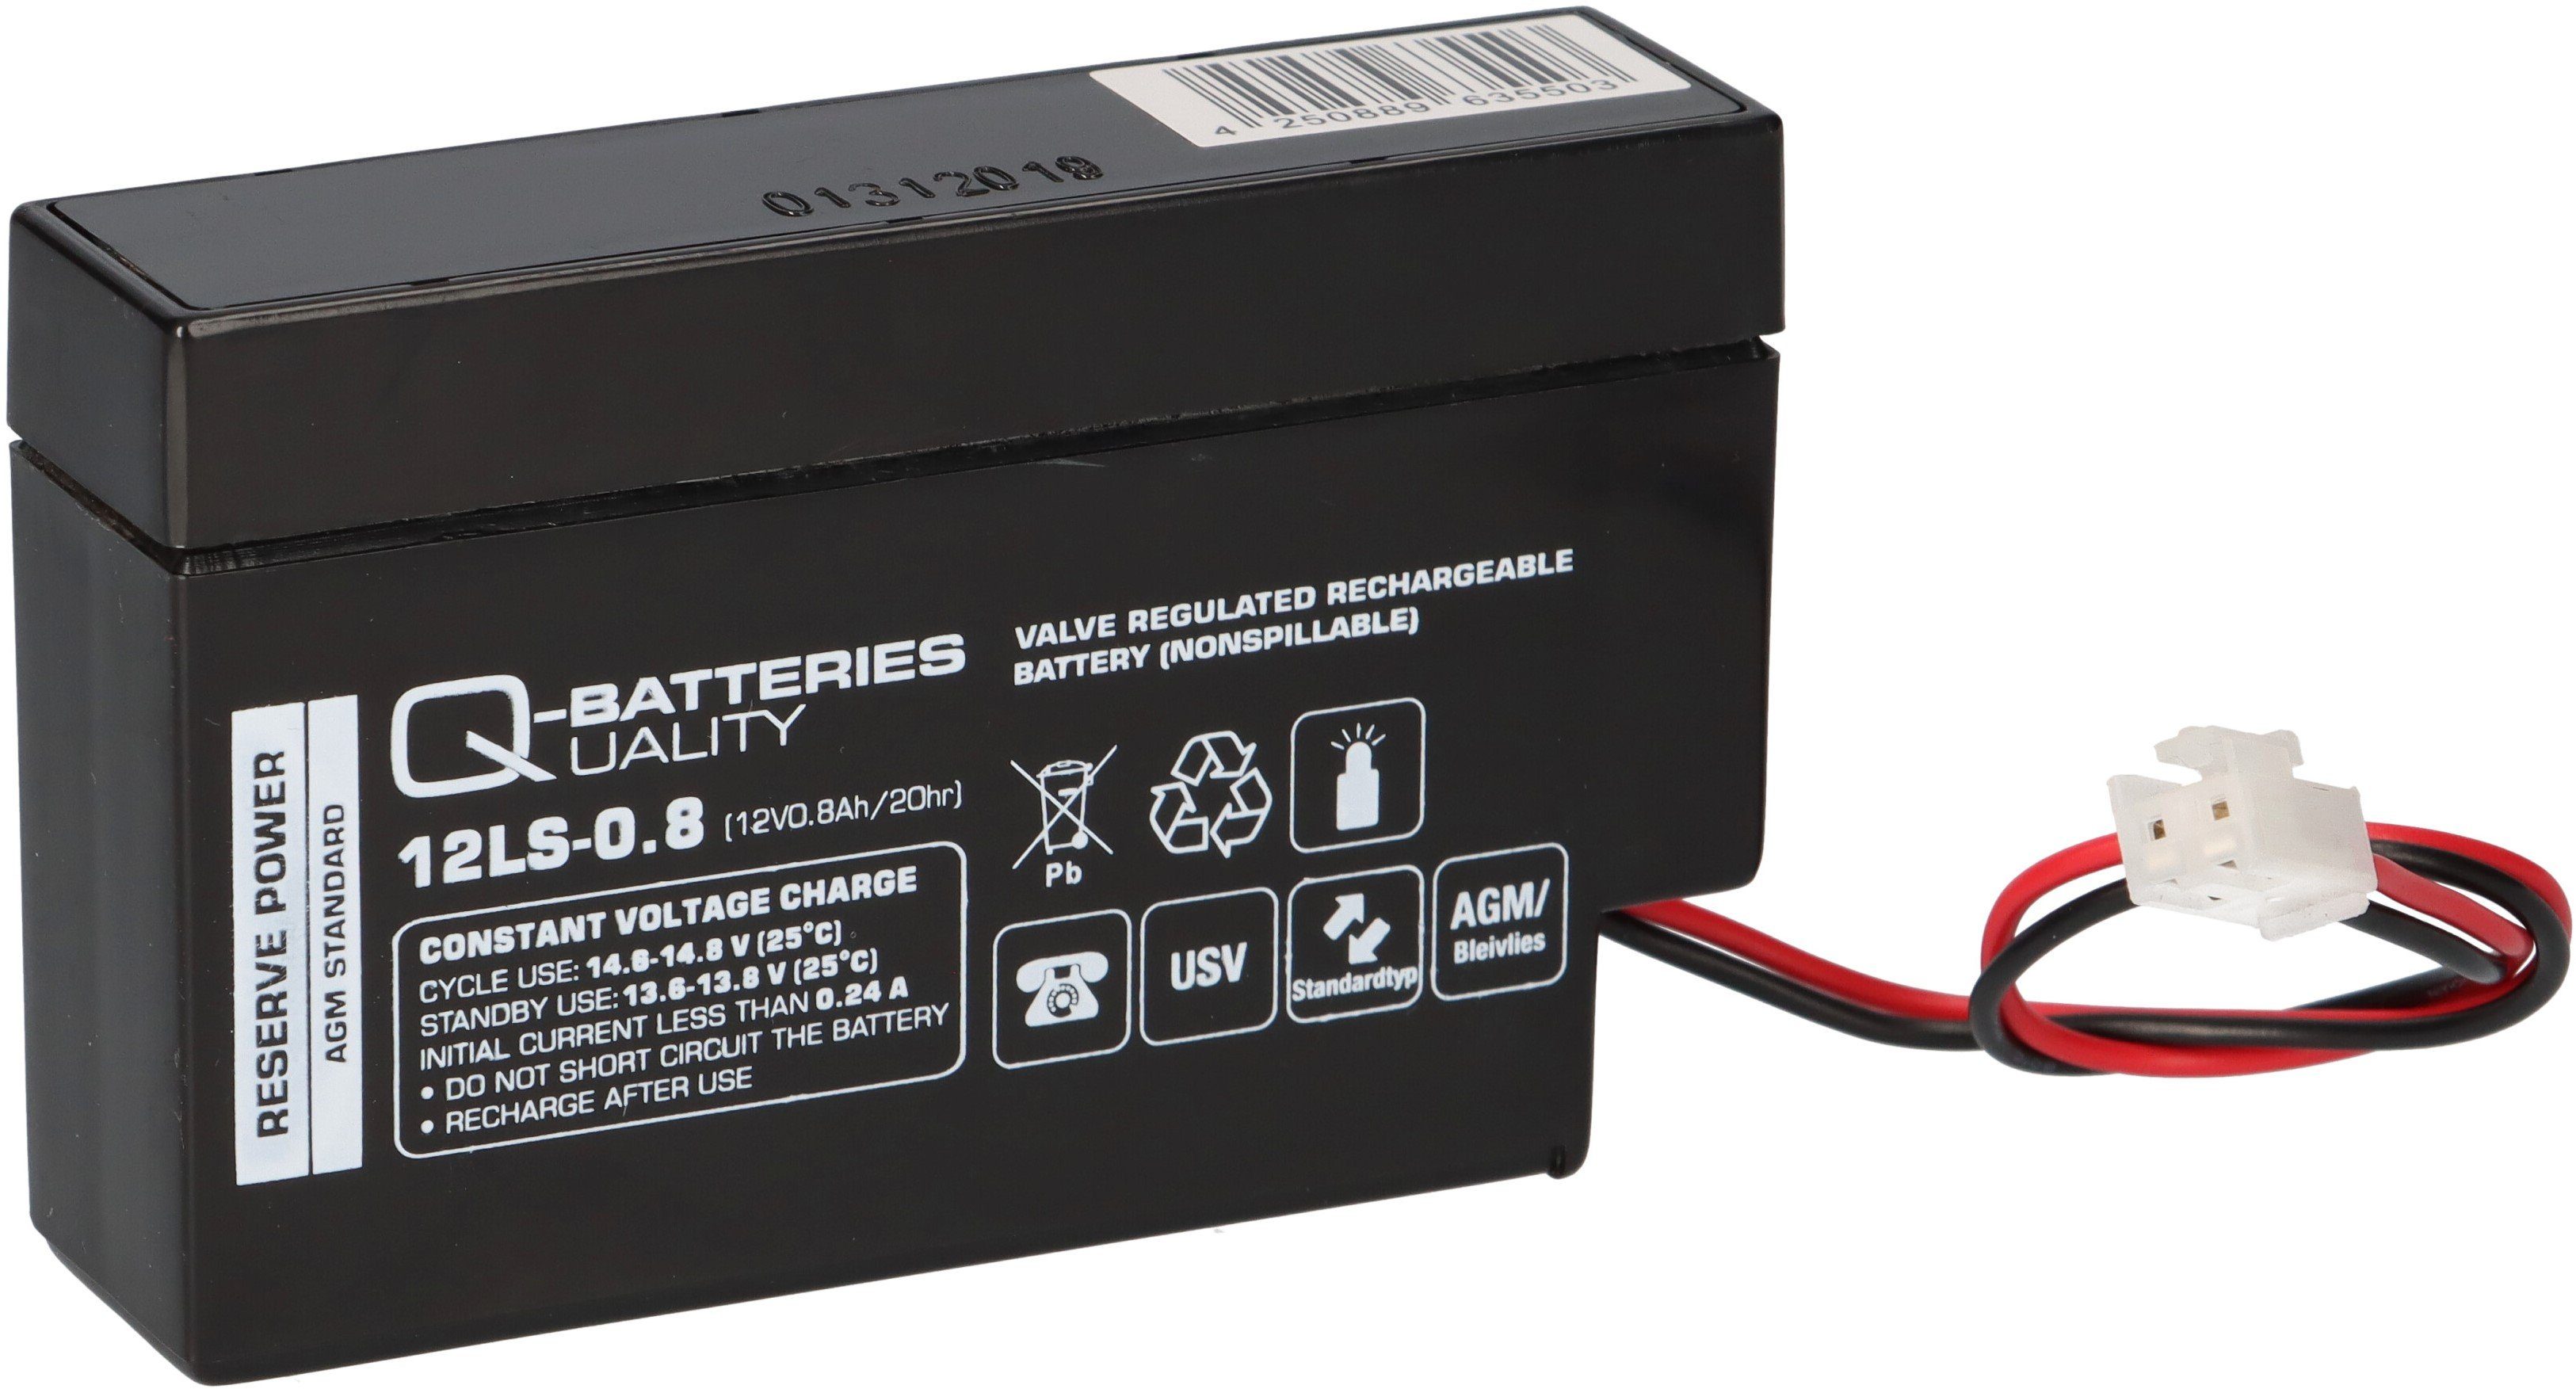 Q-Batteries Q-Batteries 12LS-0.8 12V / Bleiakkus mit 0,8Ah Blei-Vlies-Akku JST AGM Stecker